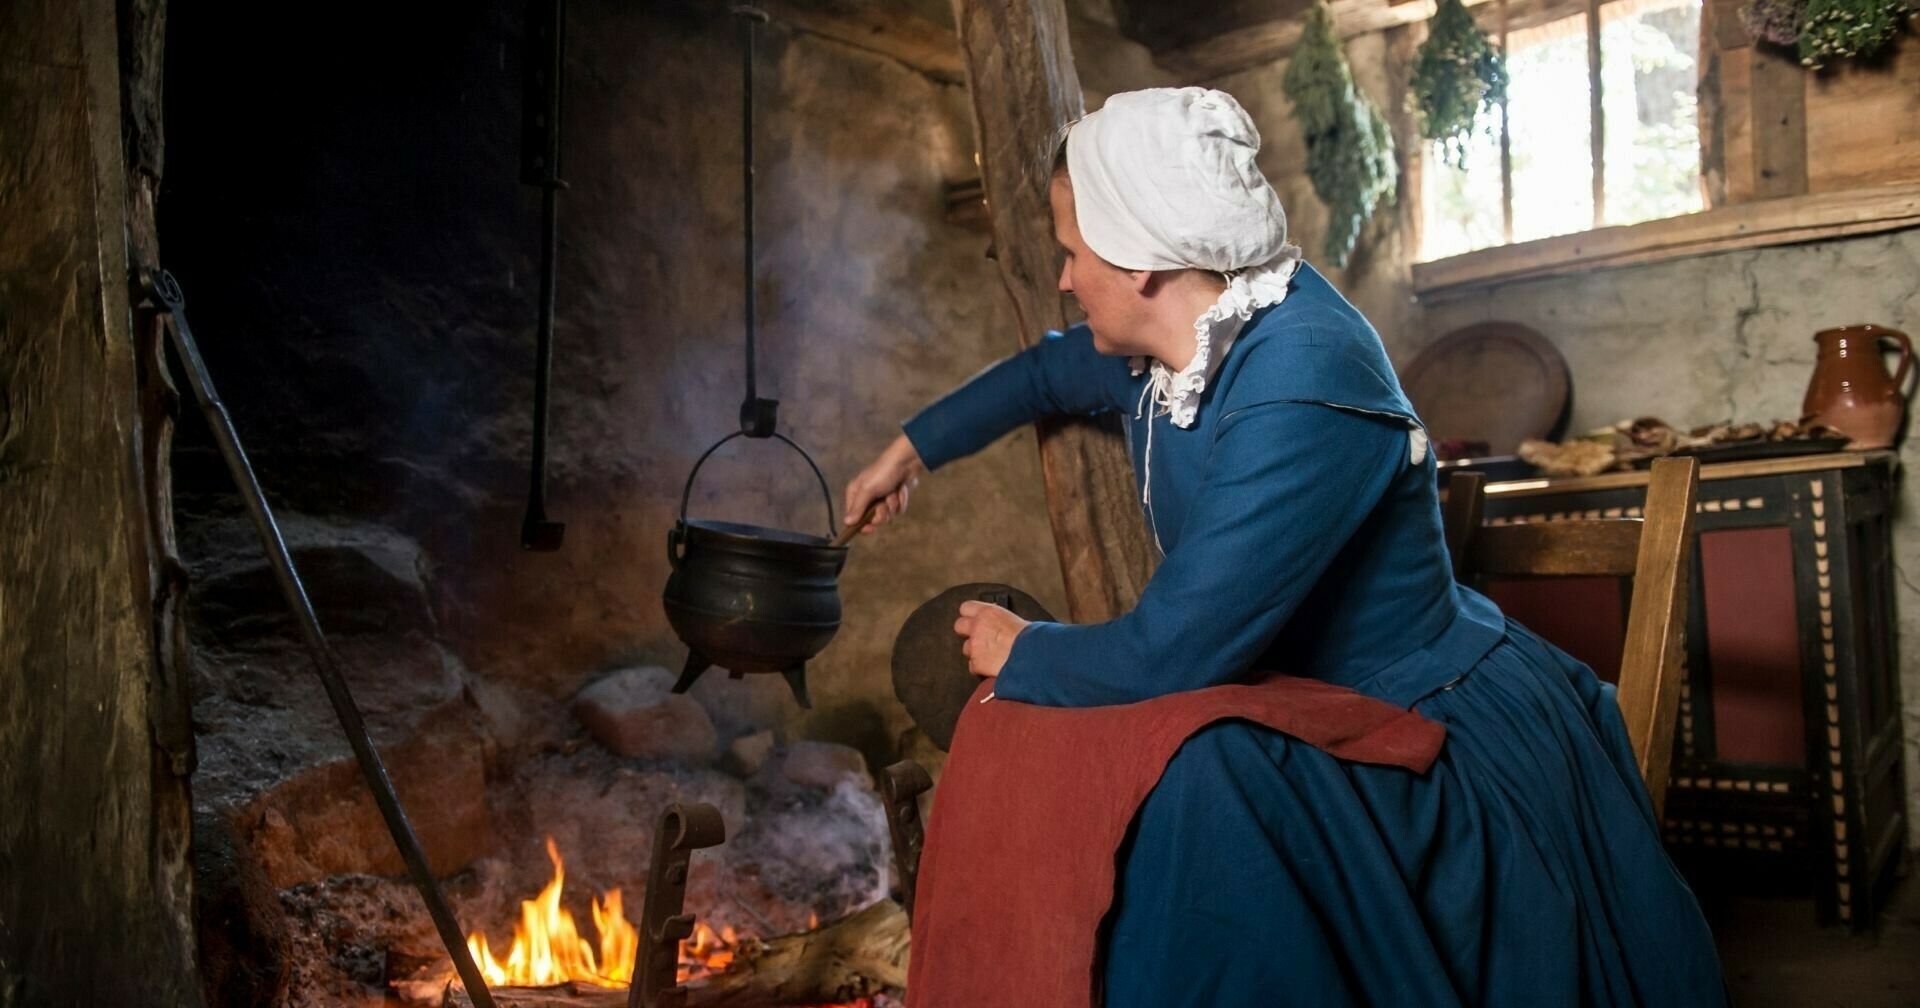 Pilgrim woman cooks over fire